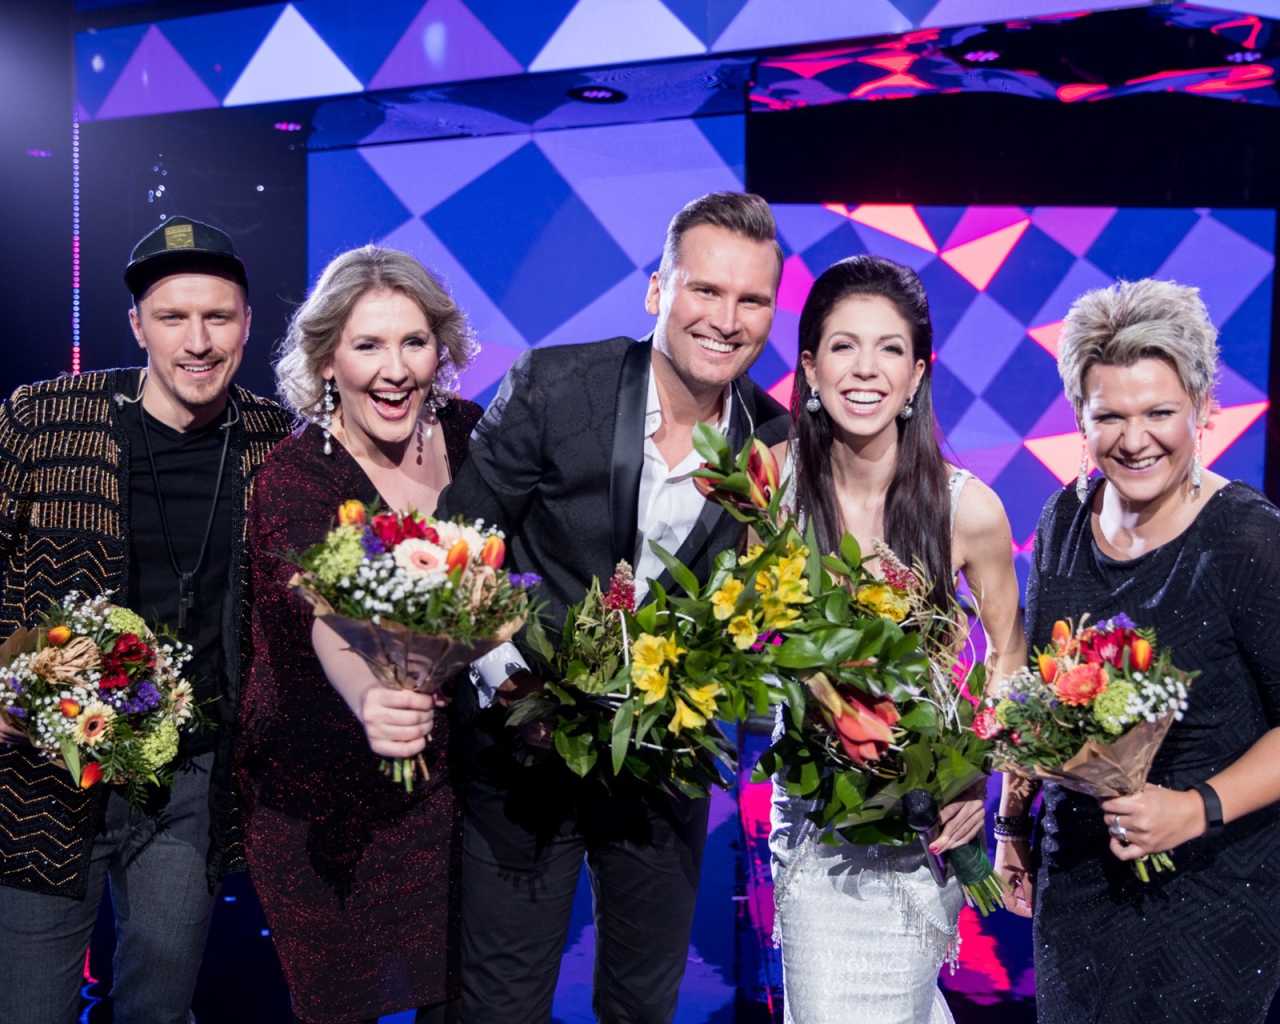 Участники Евровидения 2017 в Киеве от Эстонии Койт Тооме и Лаура  